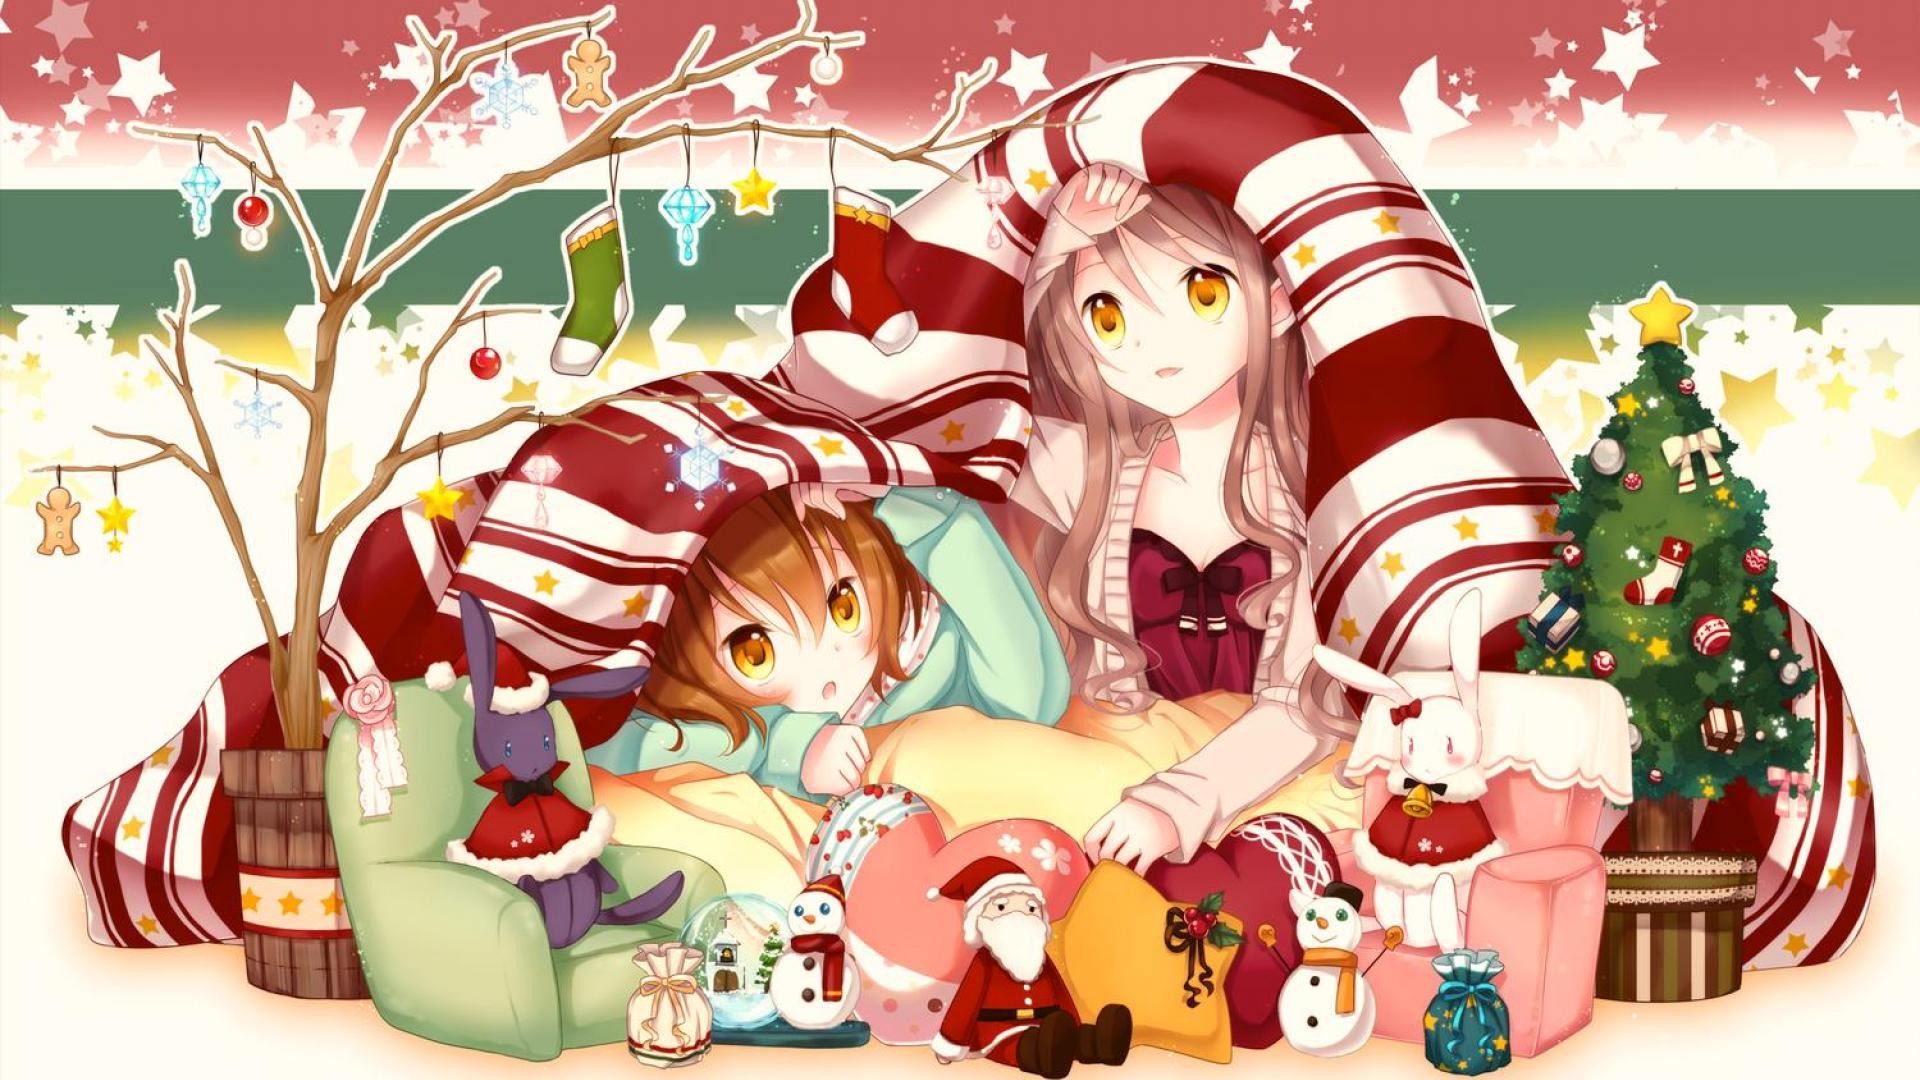 Anime Christmas Wallpapers Free download